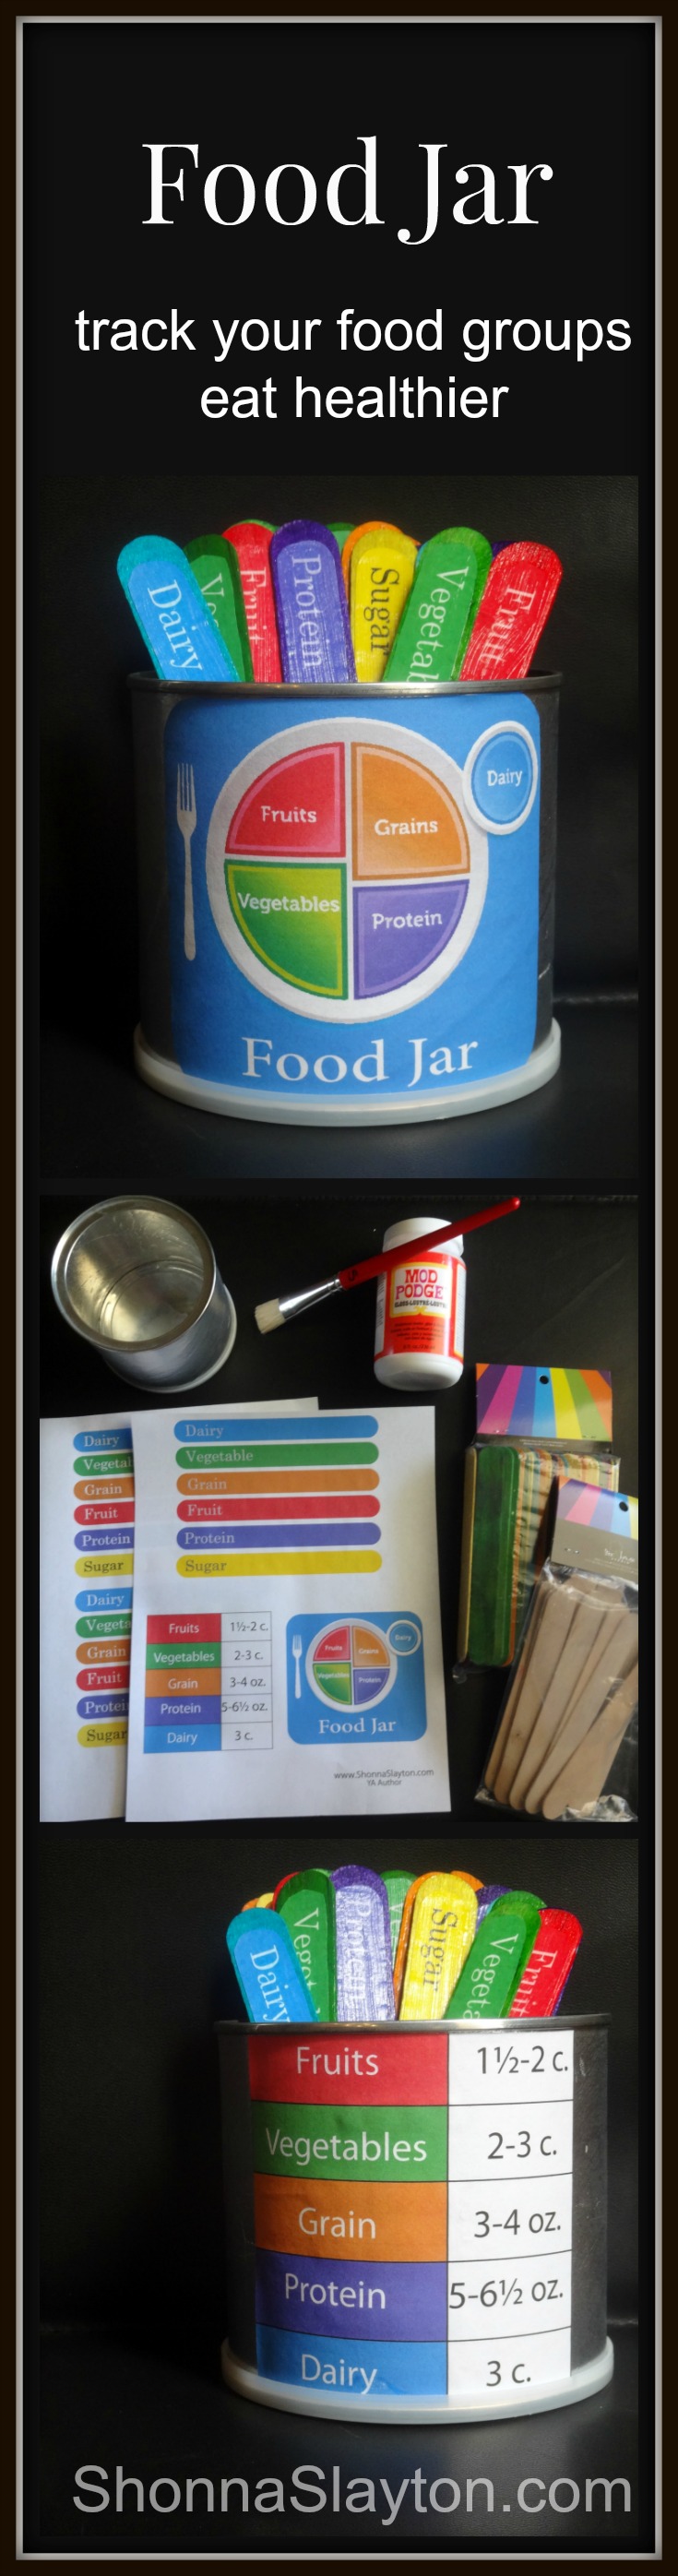 Food Jar Track Your Food Groups and Eat Healthier ShonnaSlayton.com